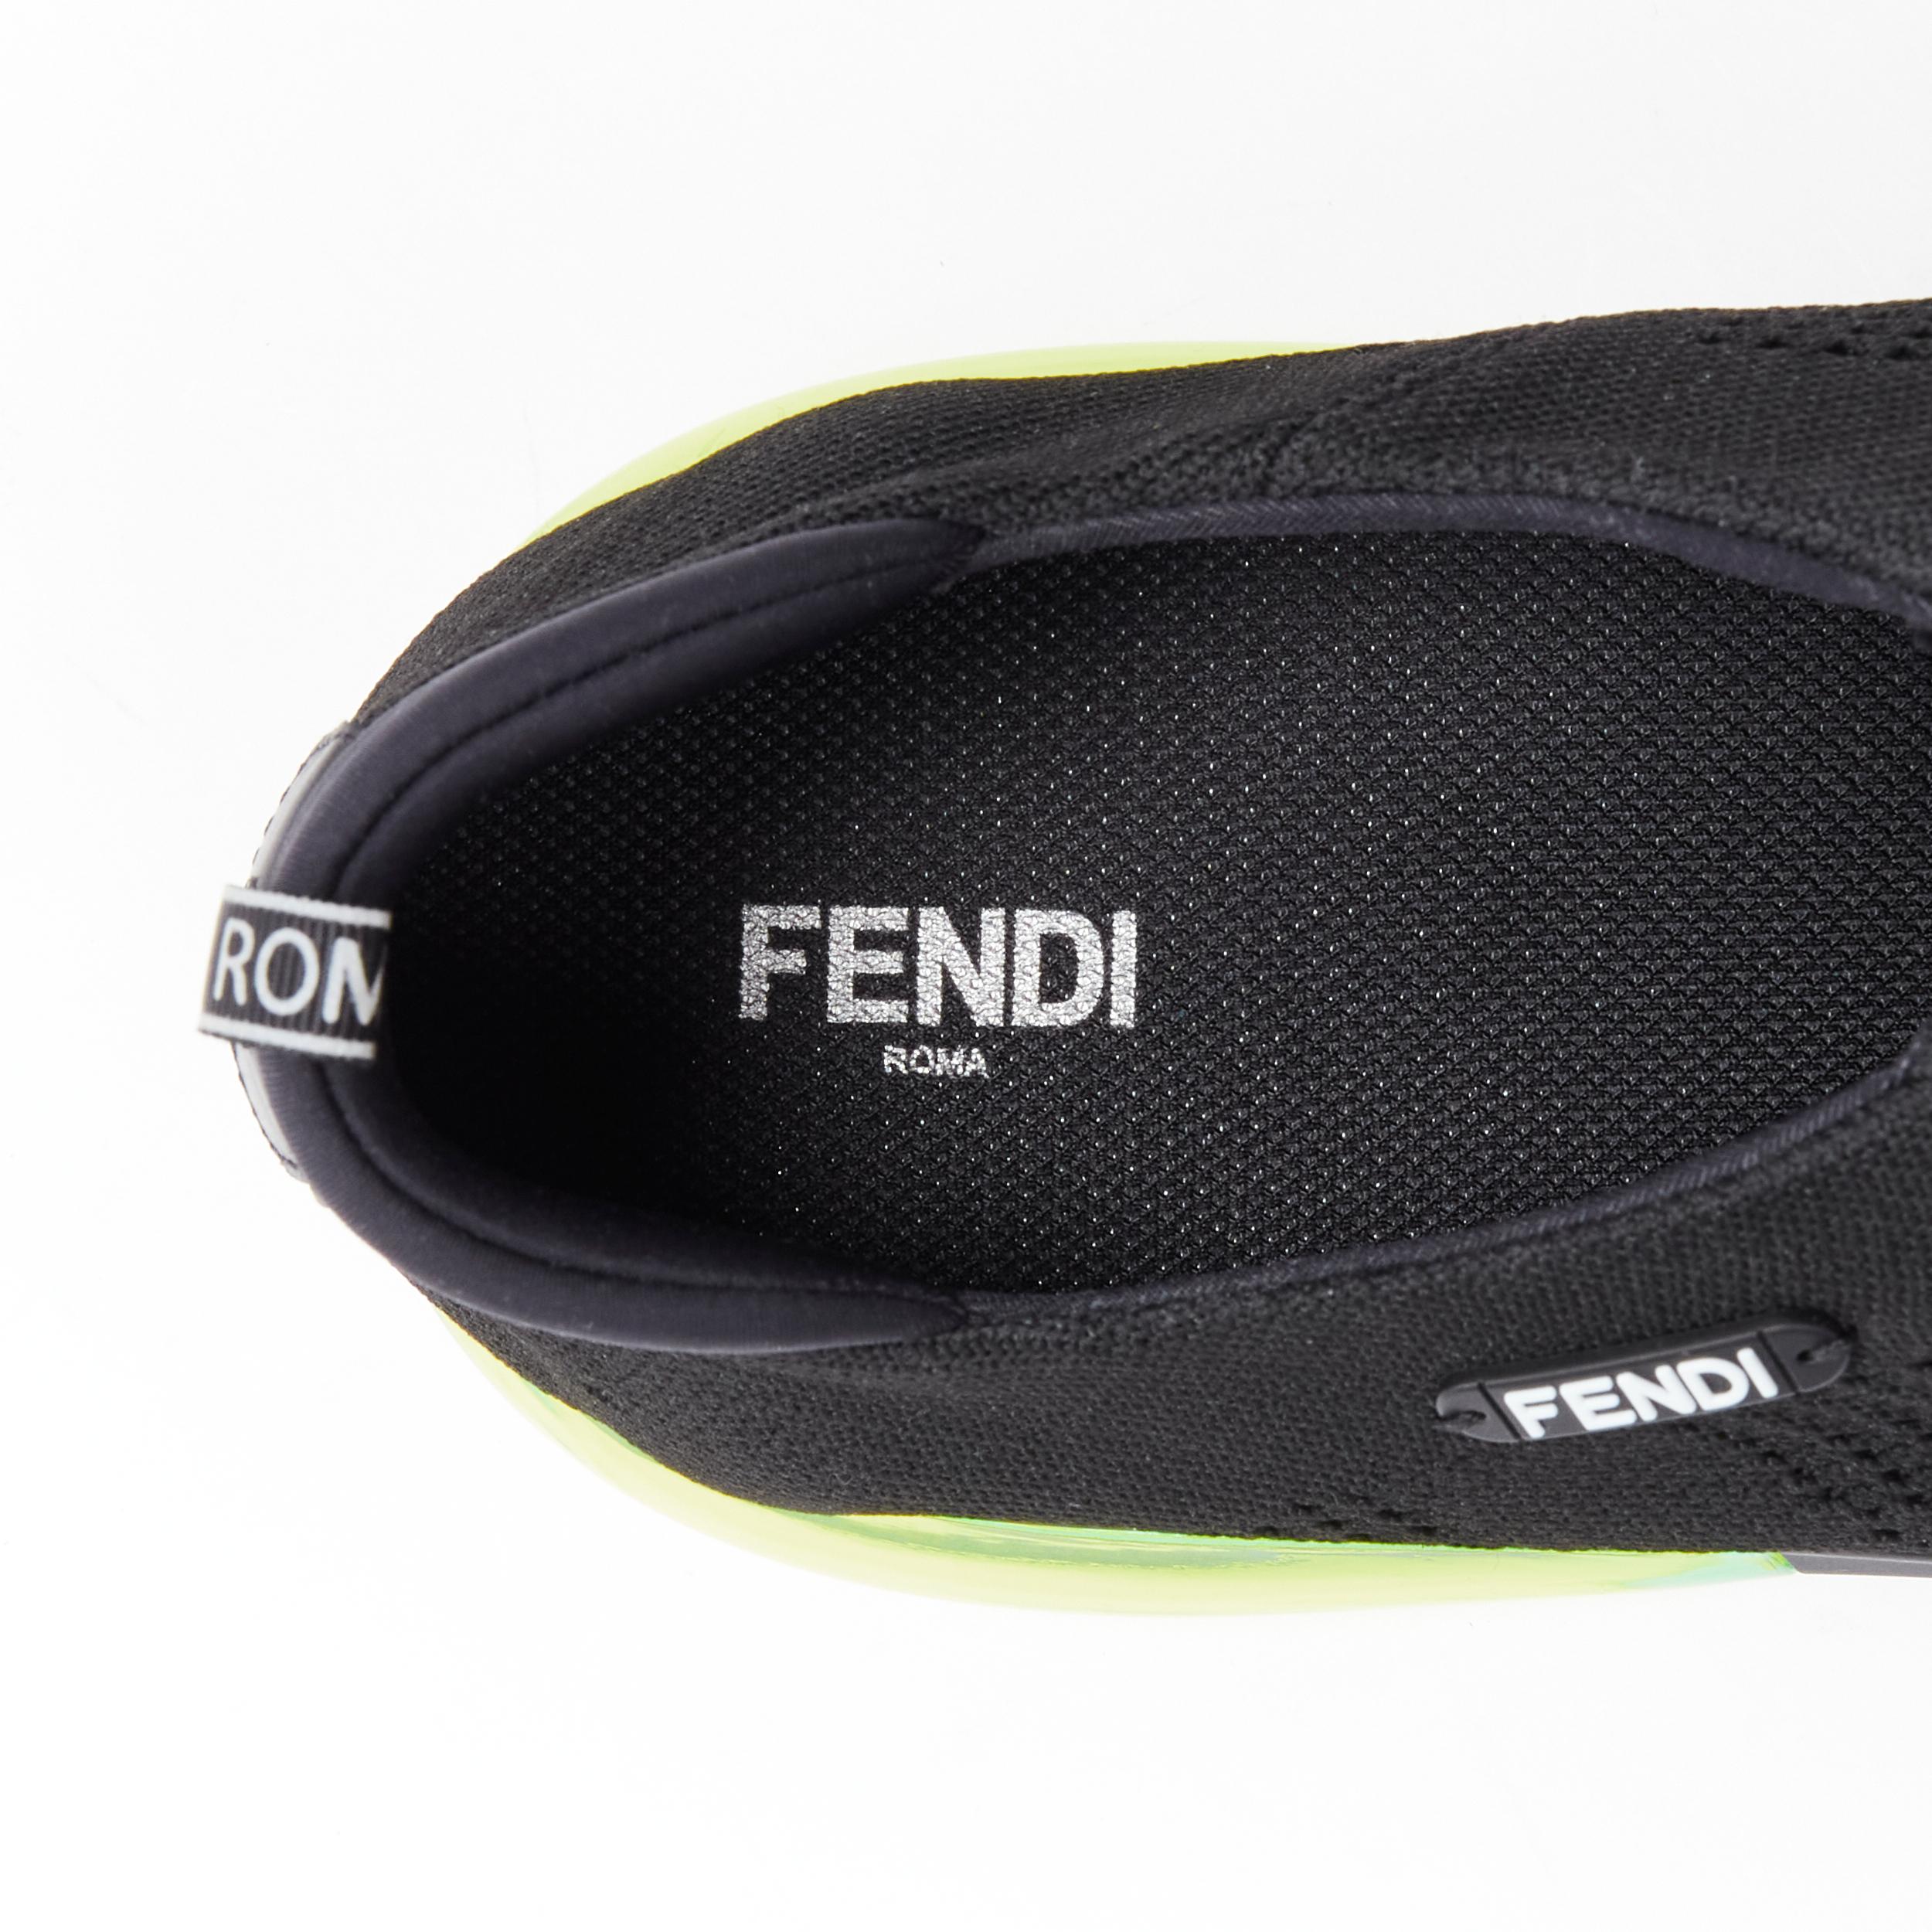 new FENDI 2019 black knit neon yellow air sole low runner sneaker 7E1234 EU44 For Sale 3